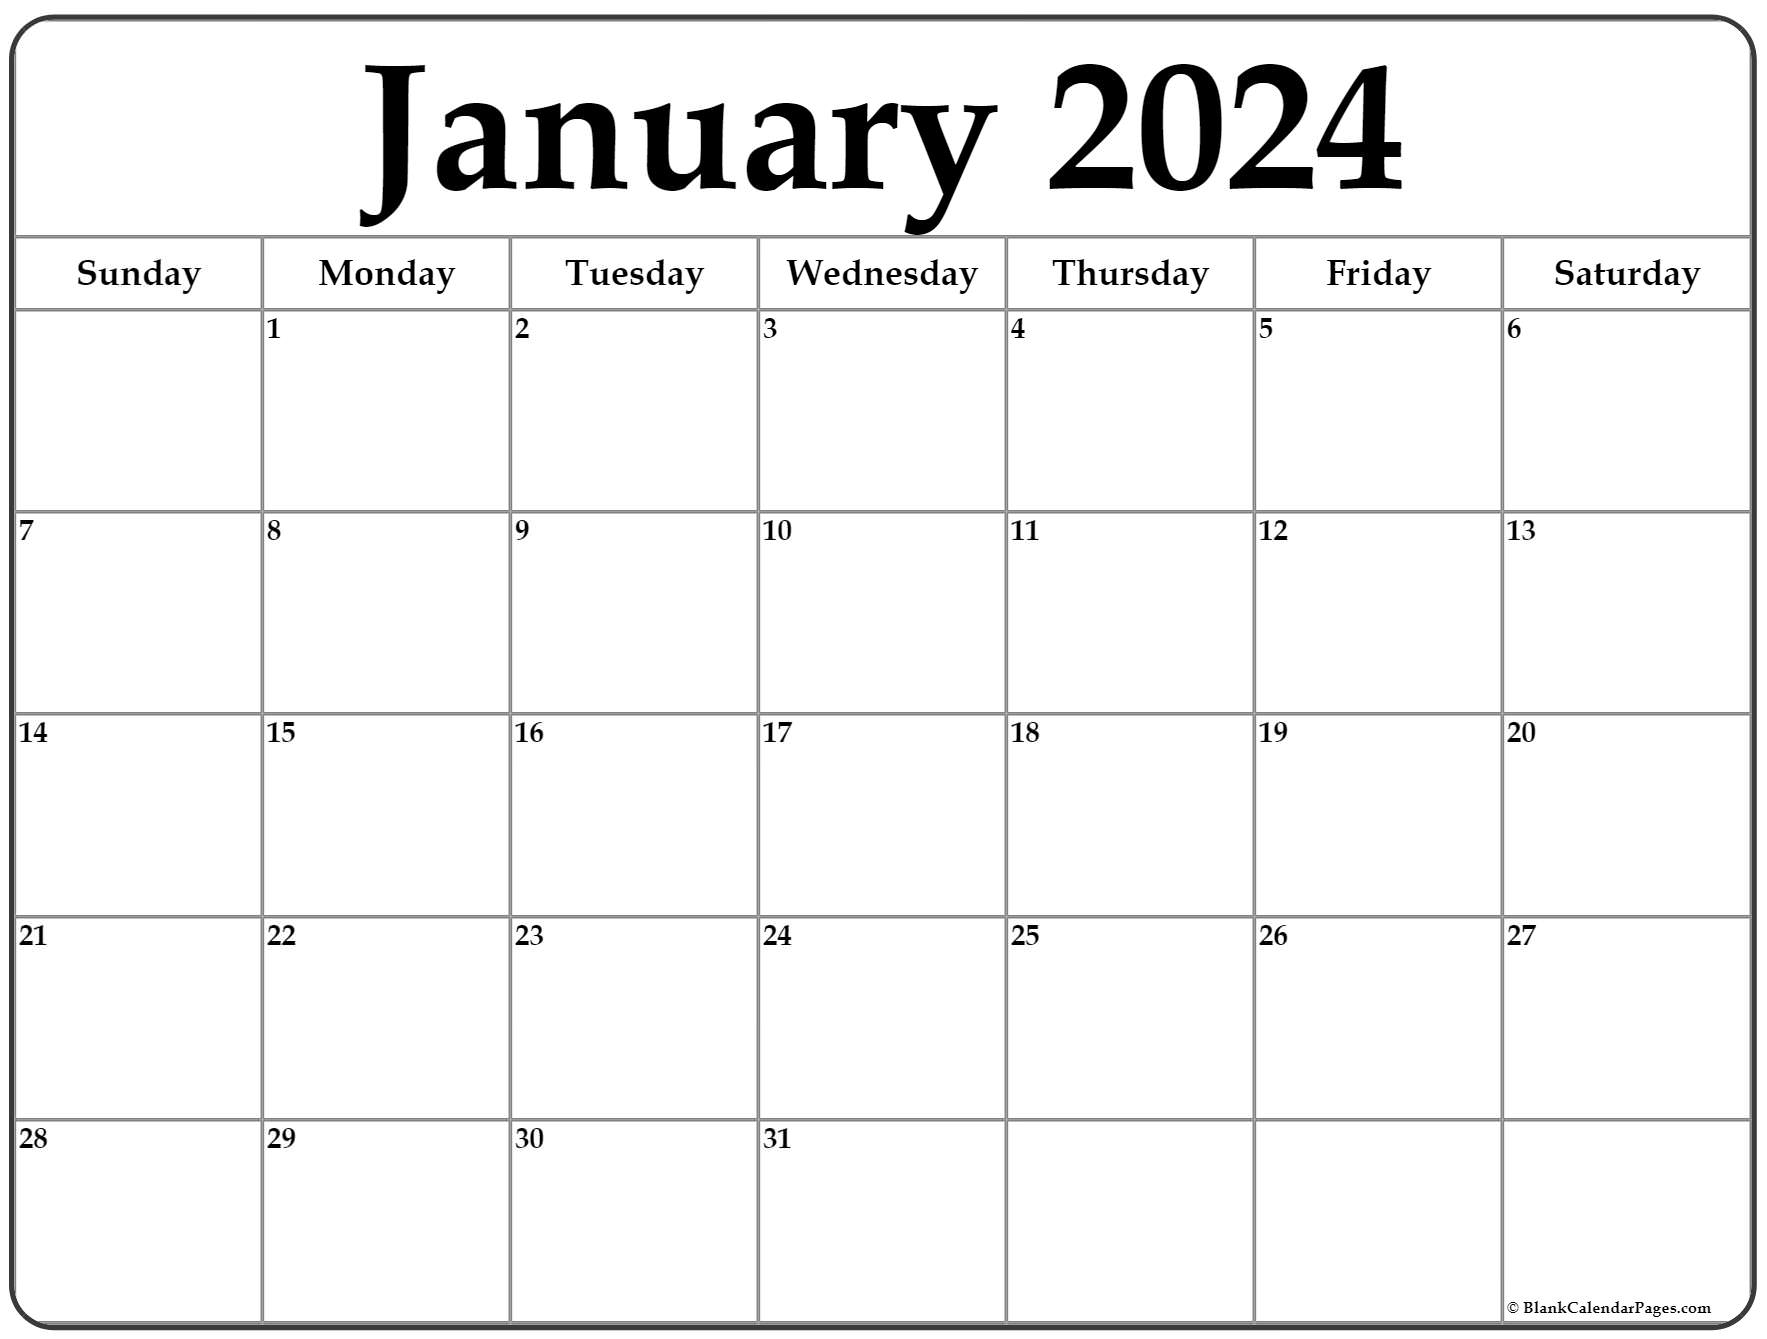 January 2024 Calendar | Free Printable Calendar for Free 2024 Monthly Calendar Printable